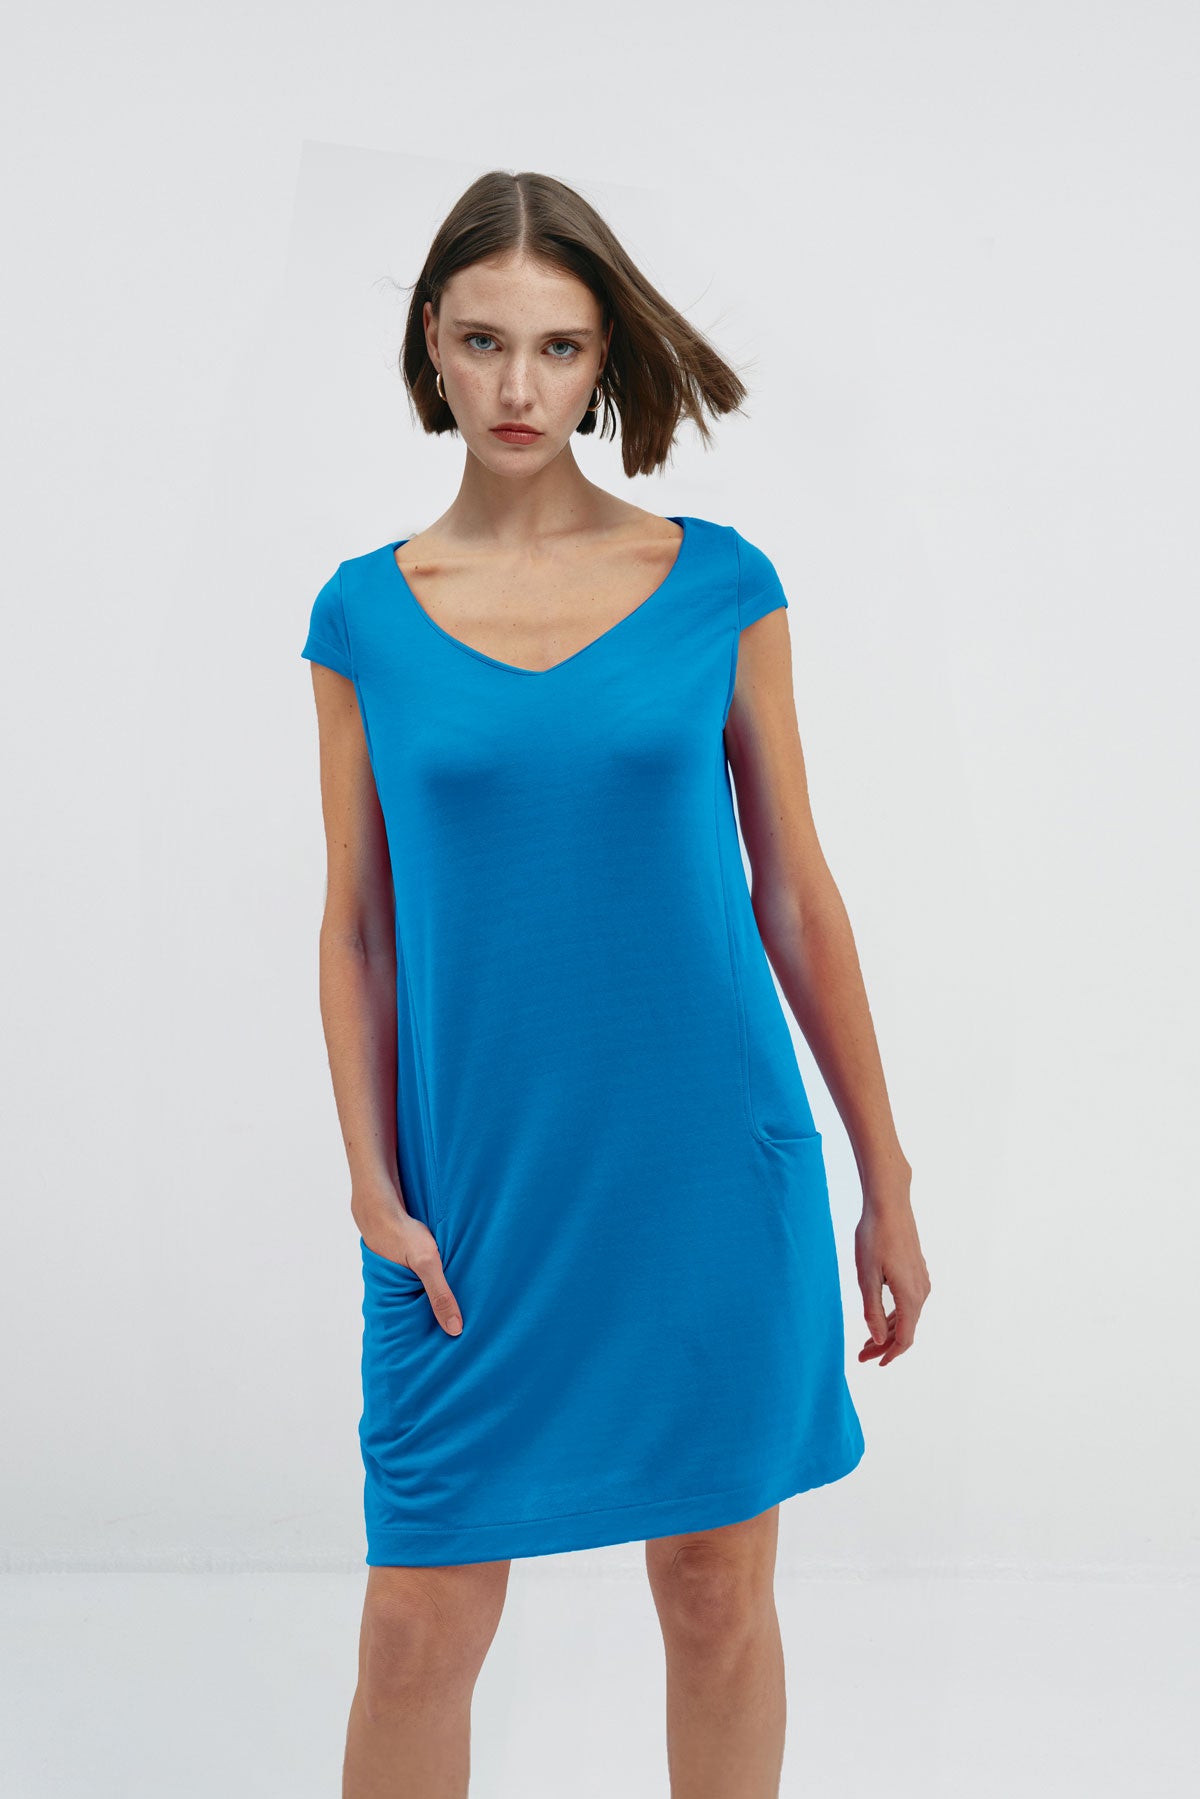 Maggoo blue woman dress